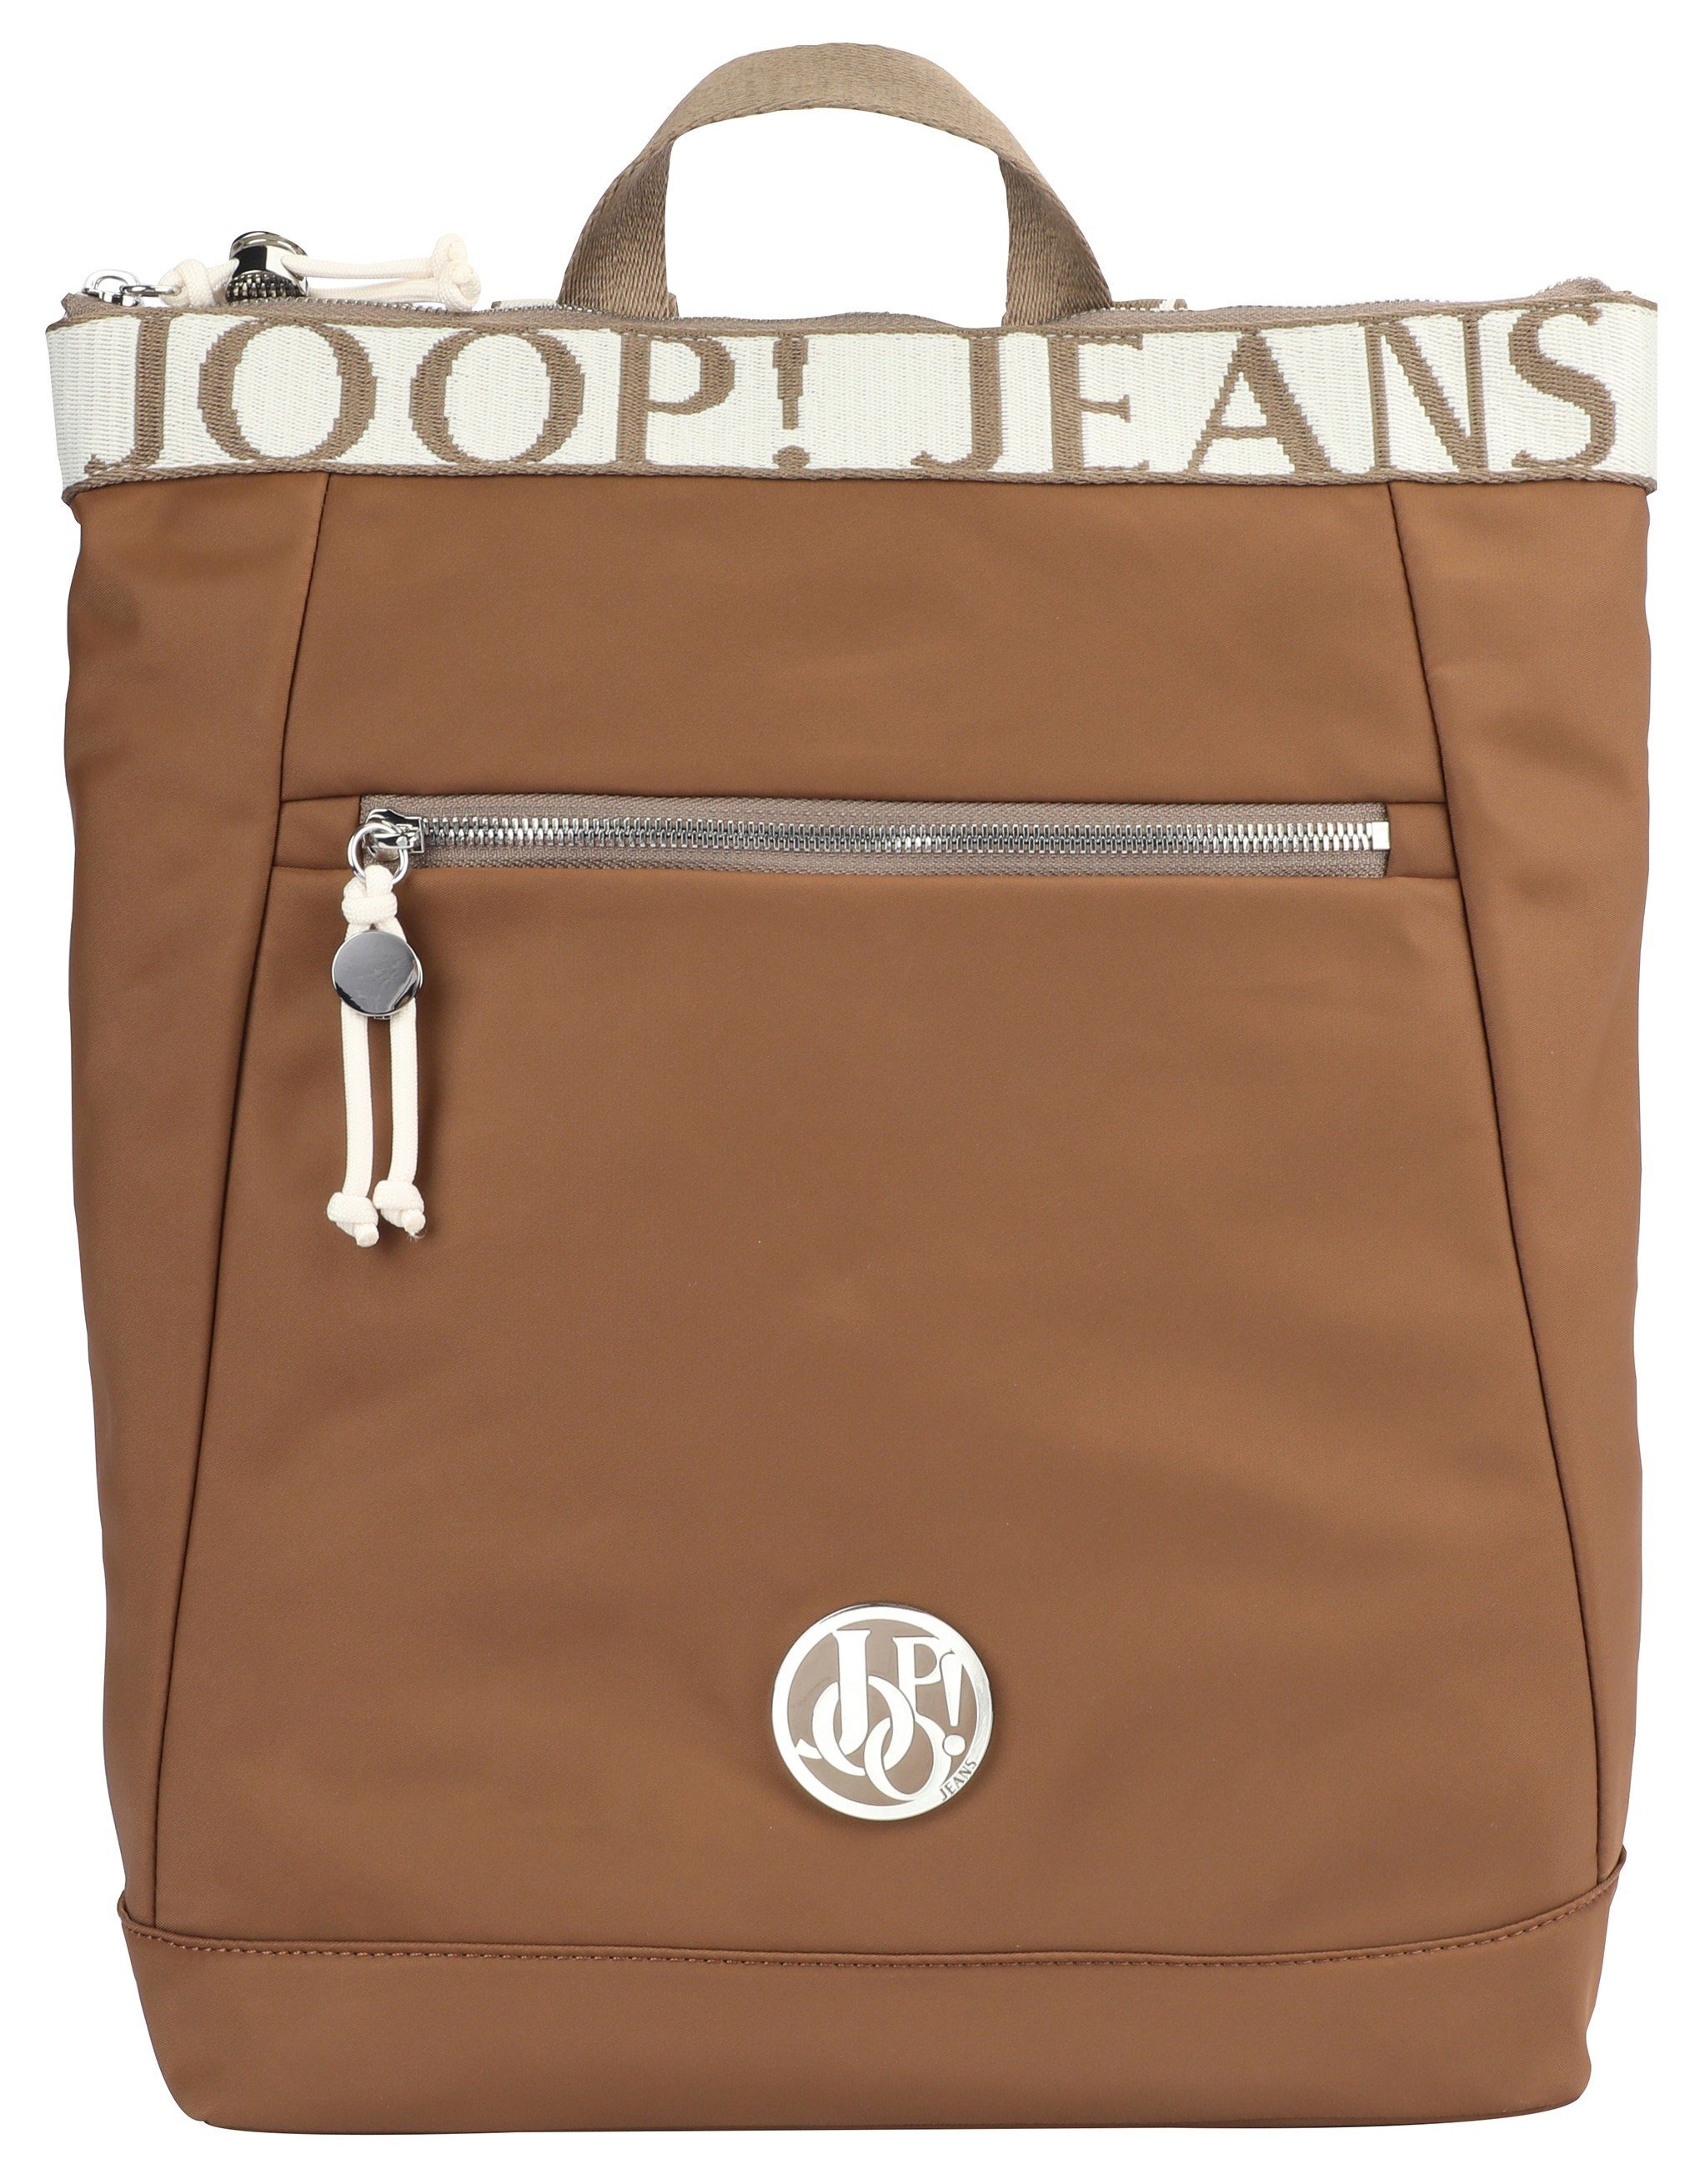 Joop Jeans Cityrucksack lietissimo elva backpack lvz, mit Logo Schriftzug auf den Trageriemen braun